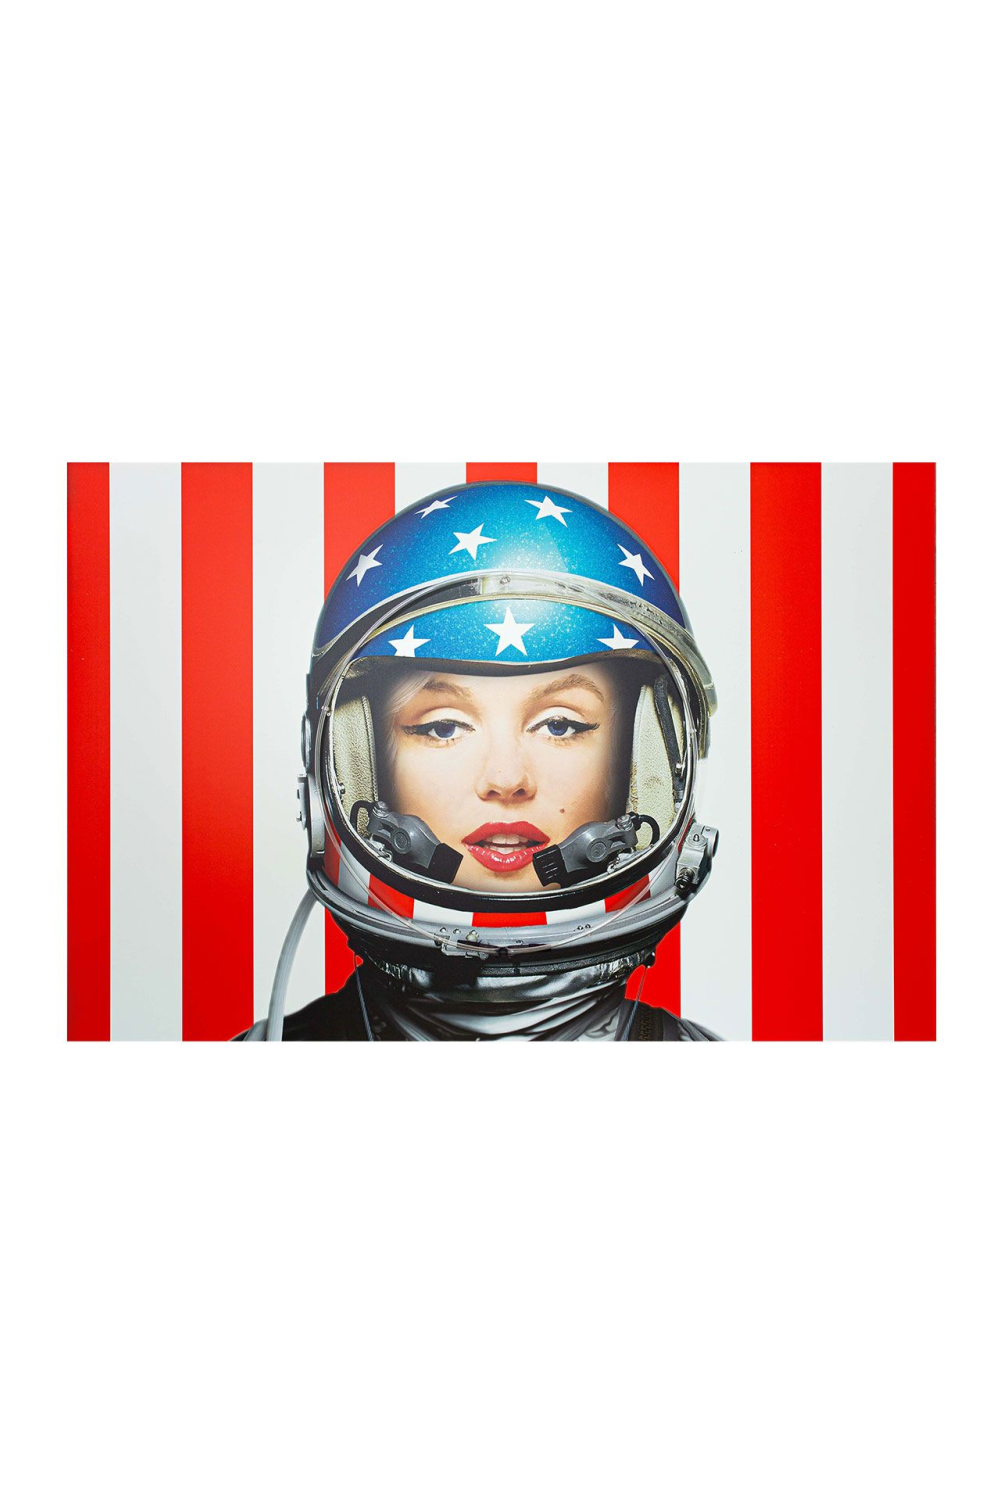 Iconic Retro Neon Artwork | Andrew Martin Marilyn Astronaut | Oroa.com